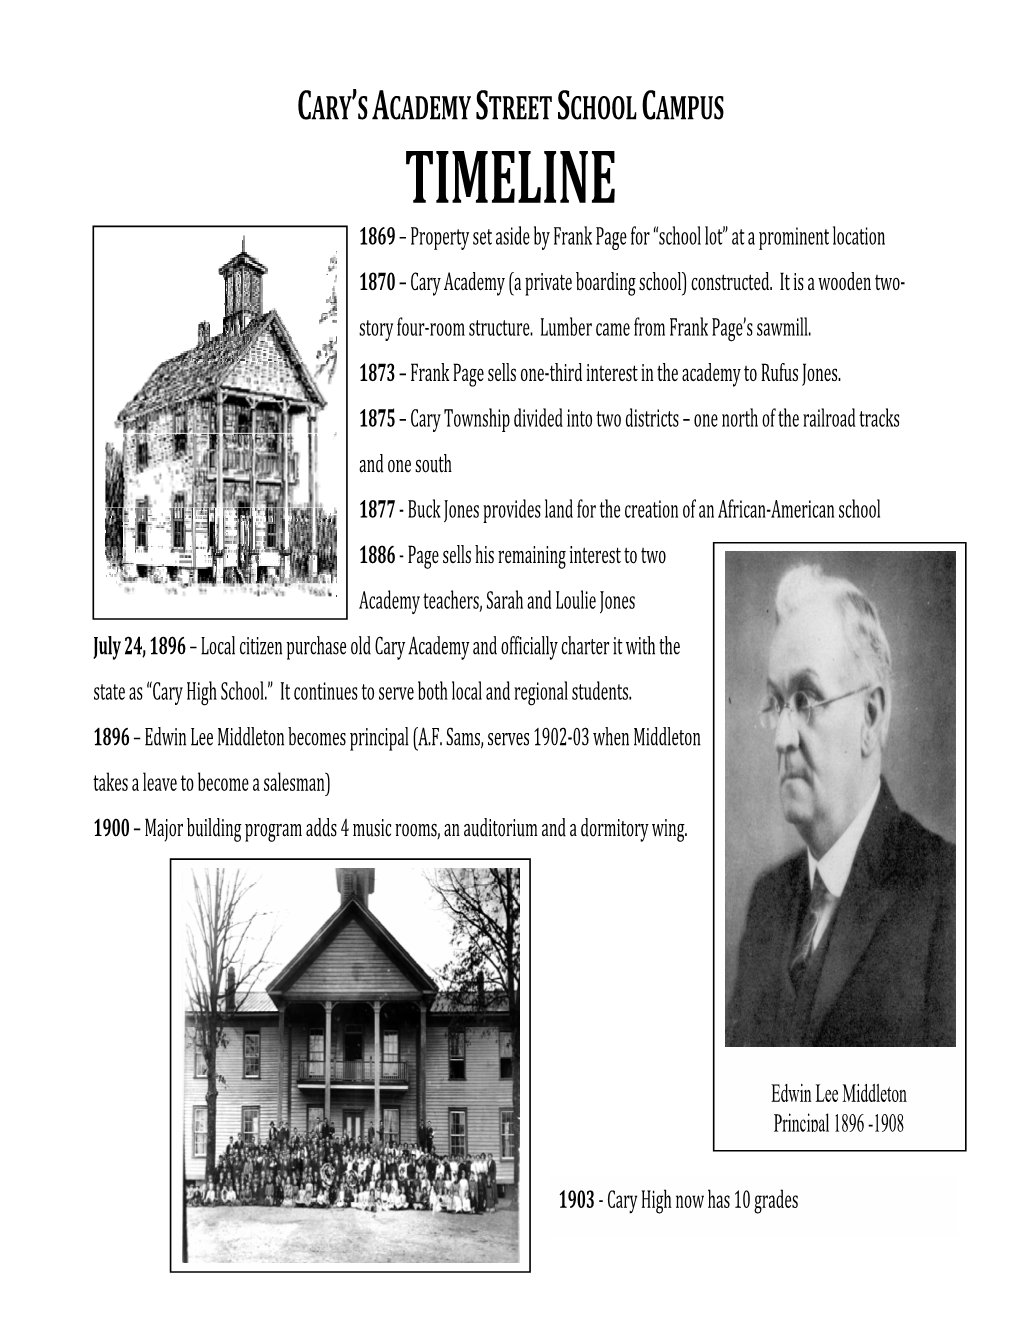 Cary's Academy Street School Campus Timeline